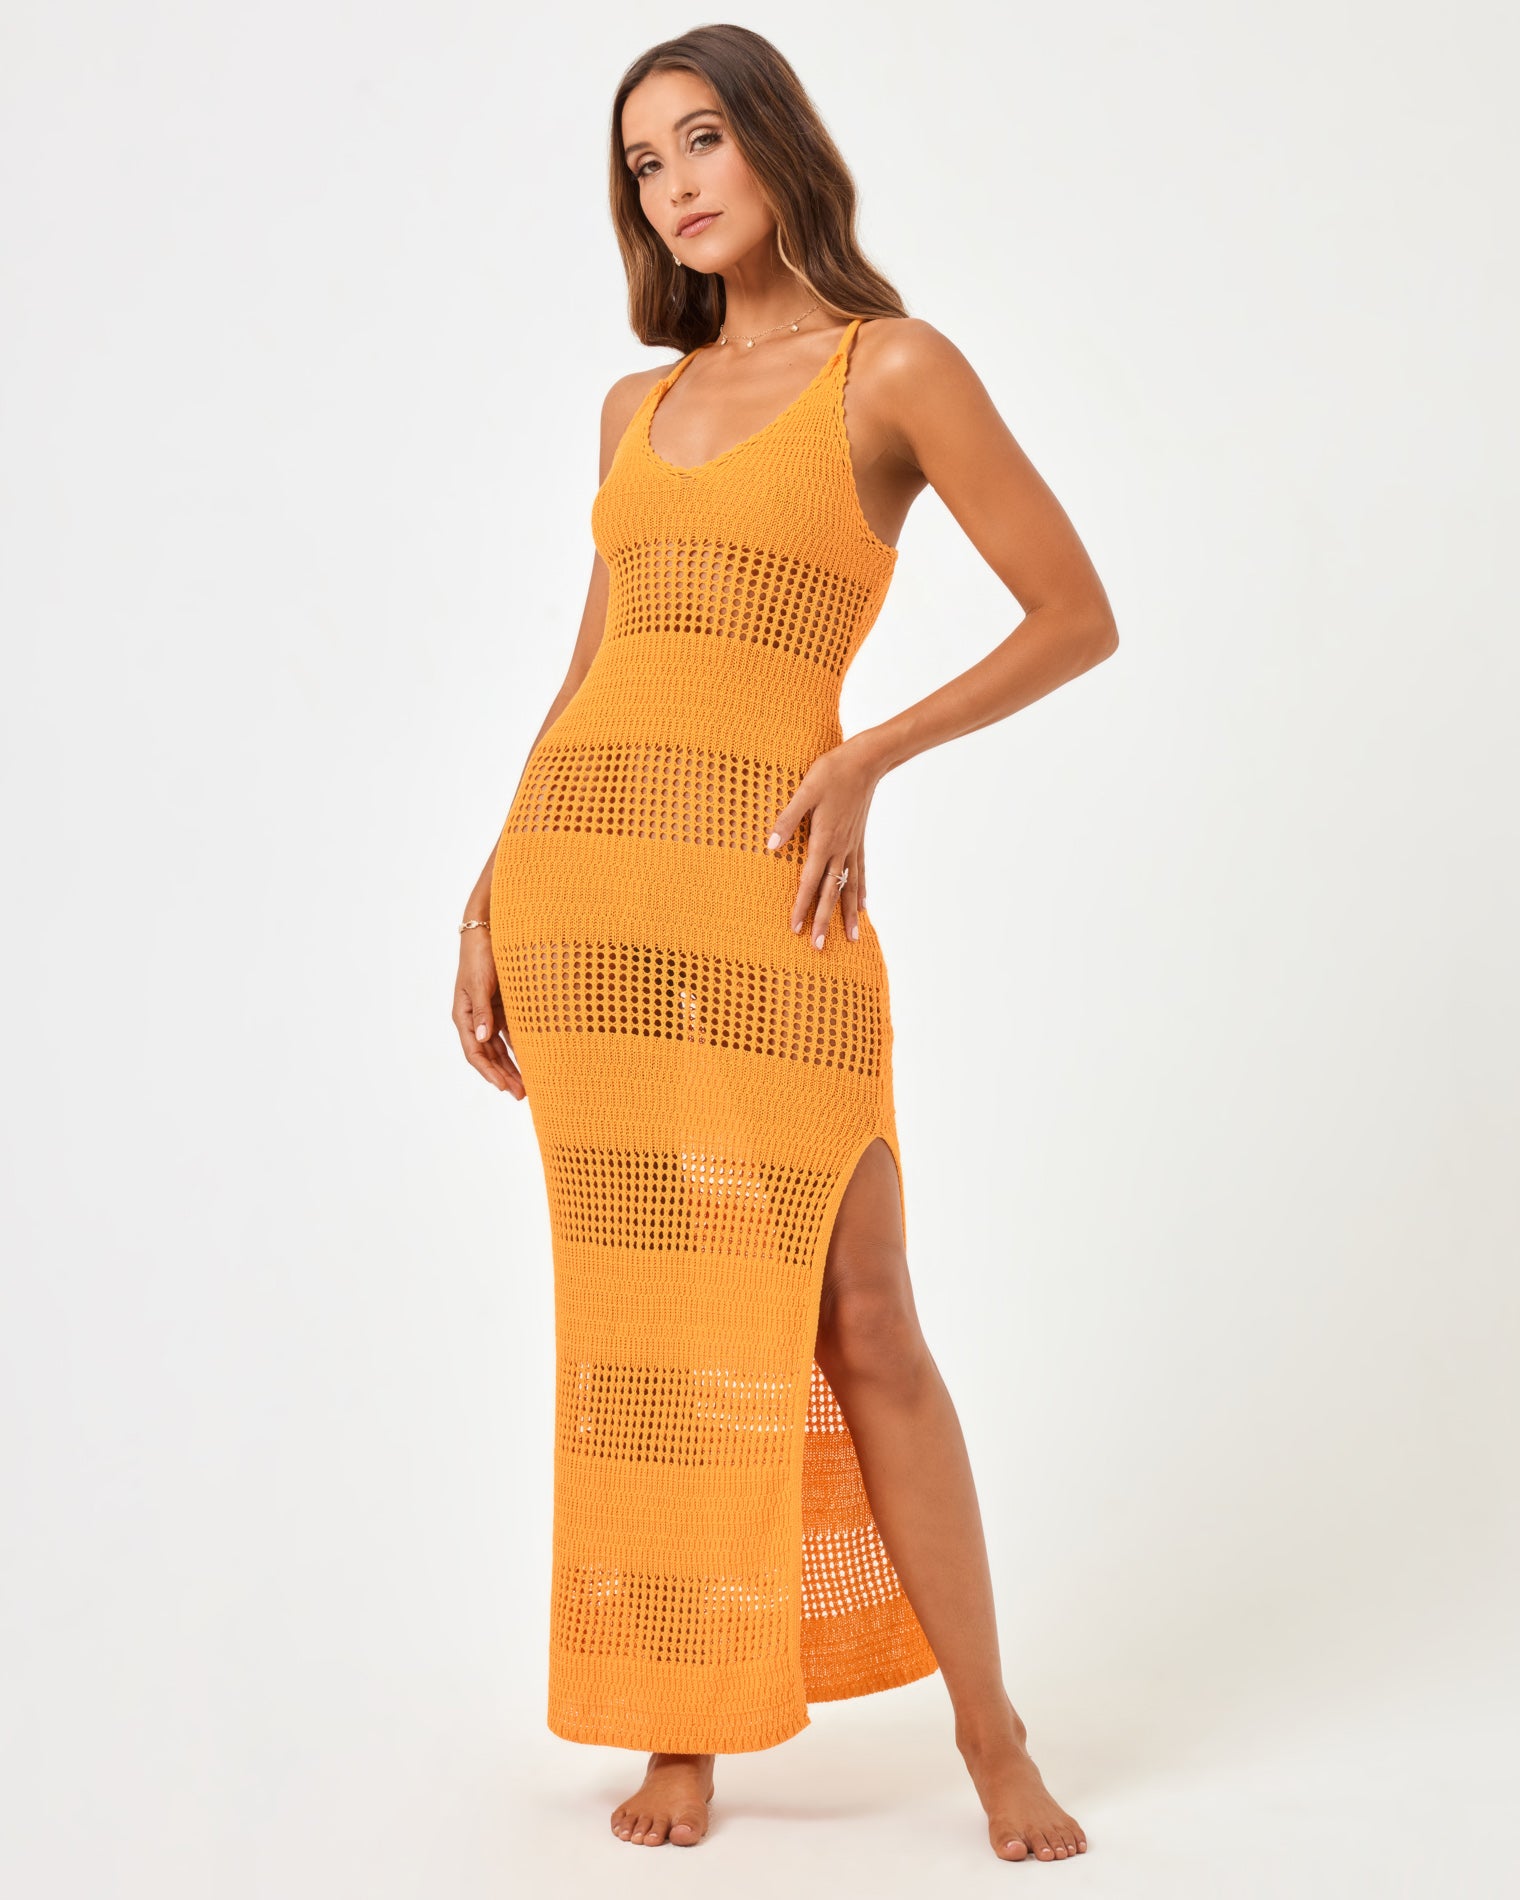 Kalea Dress - Tamarind Tamarind | Model: Anna (size: S)